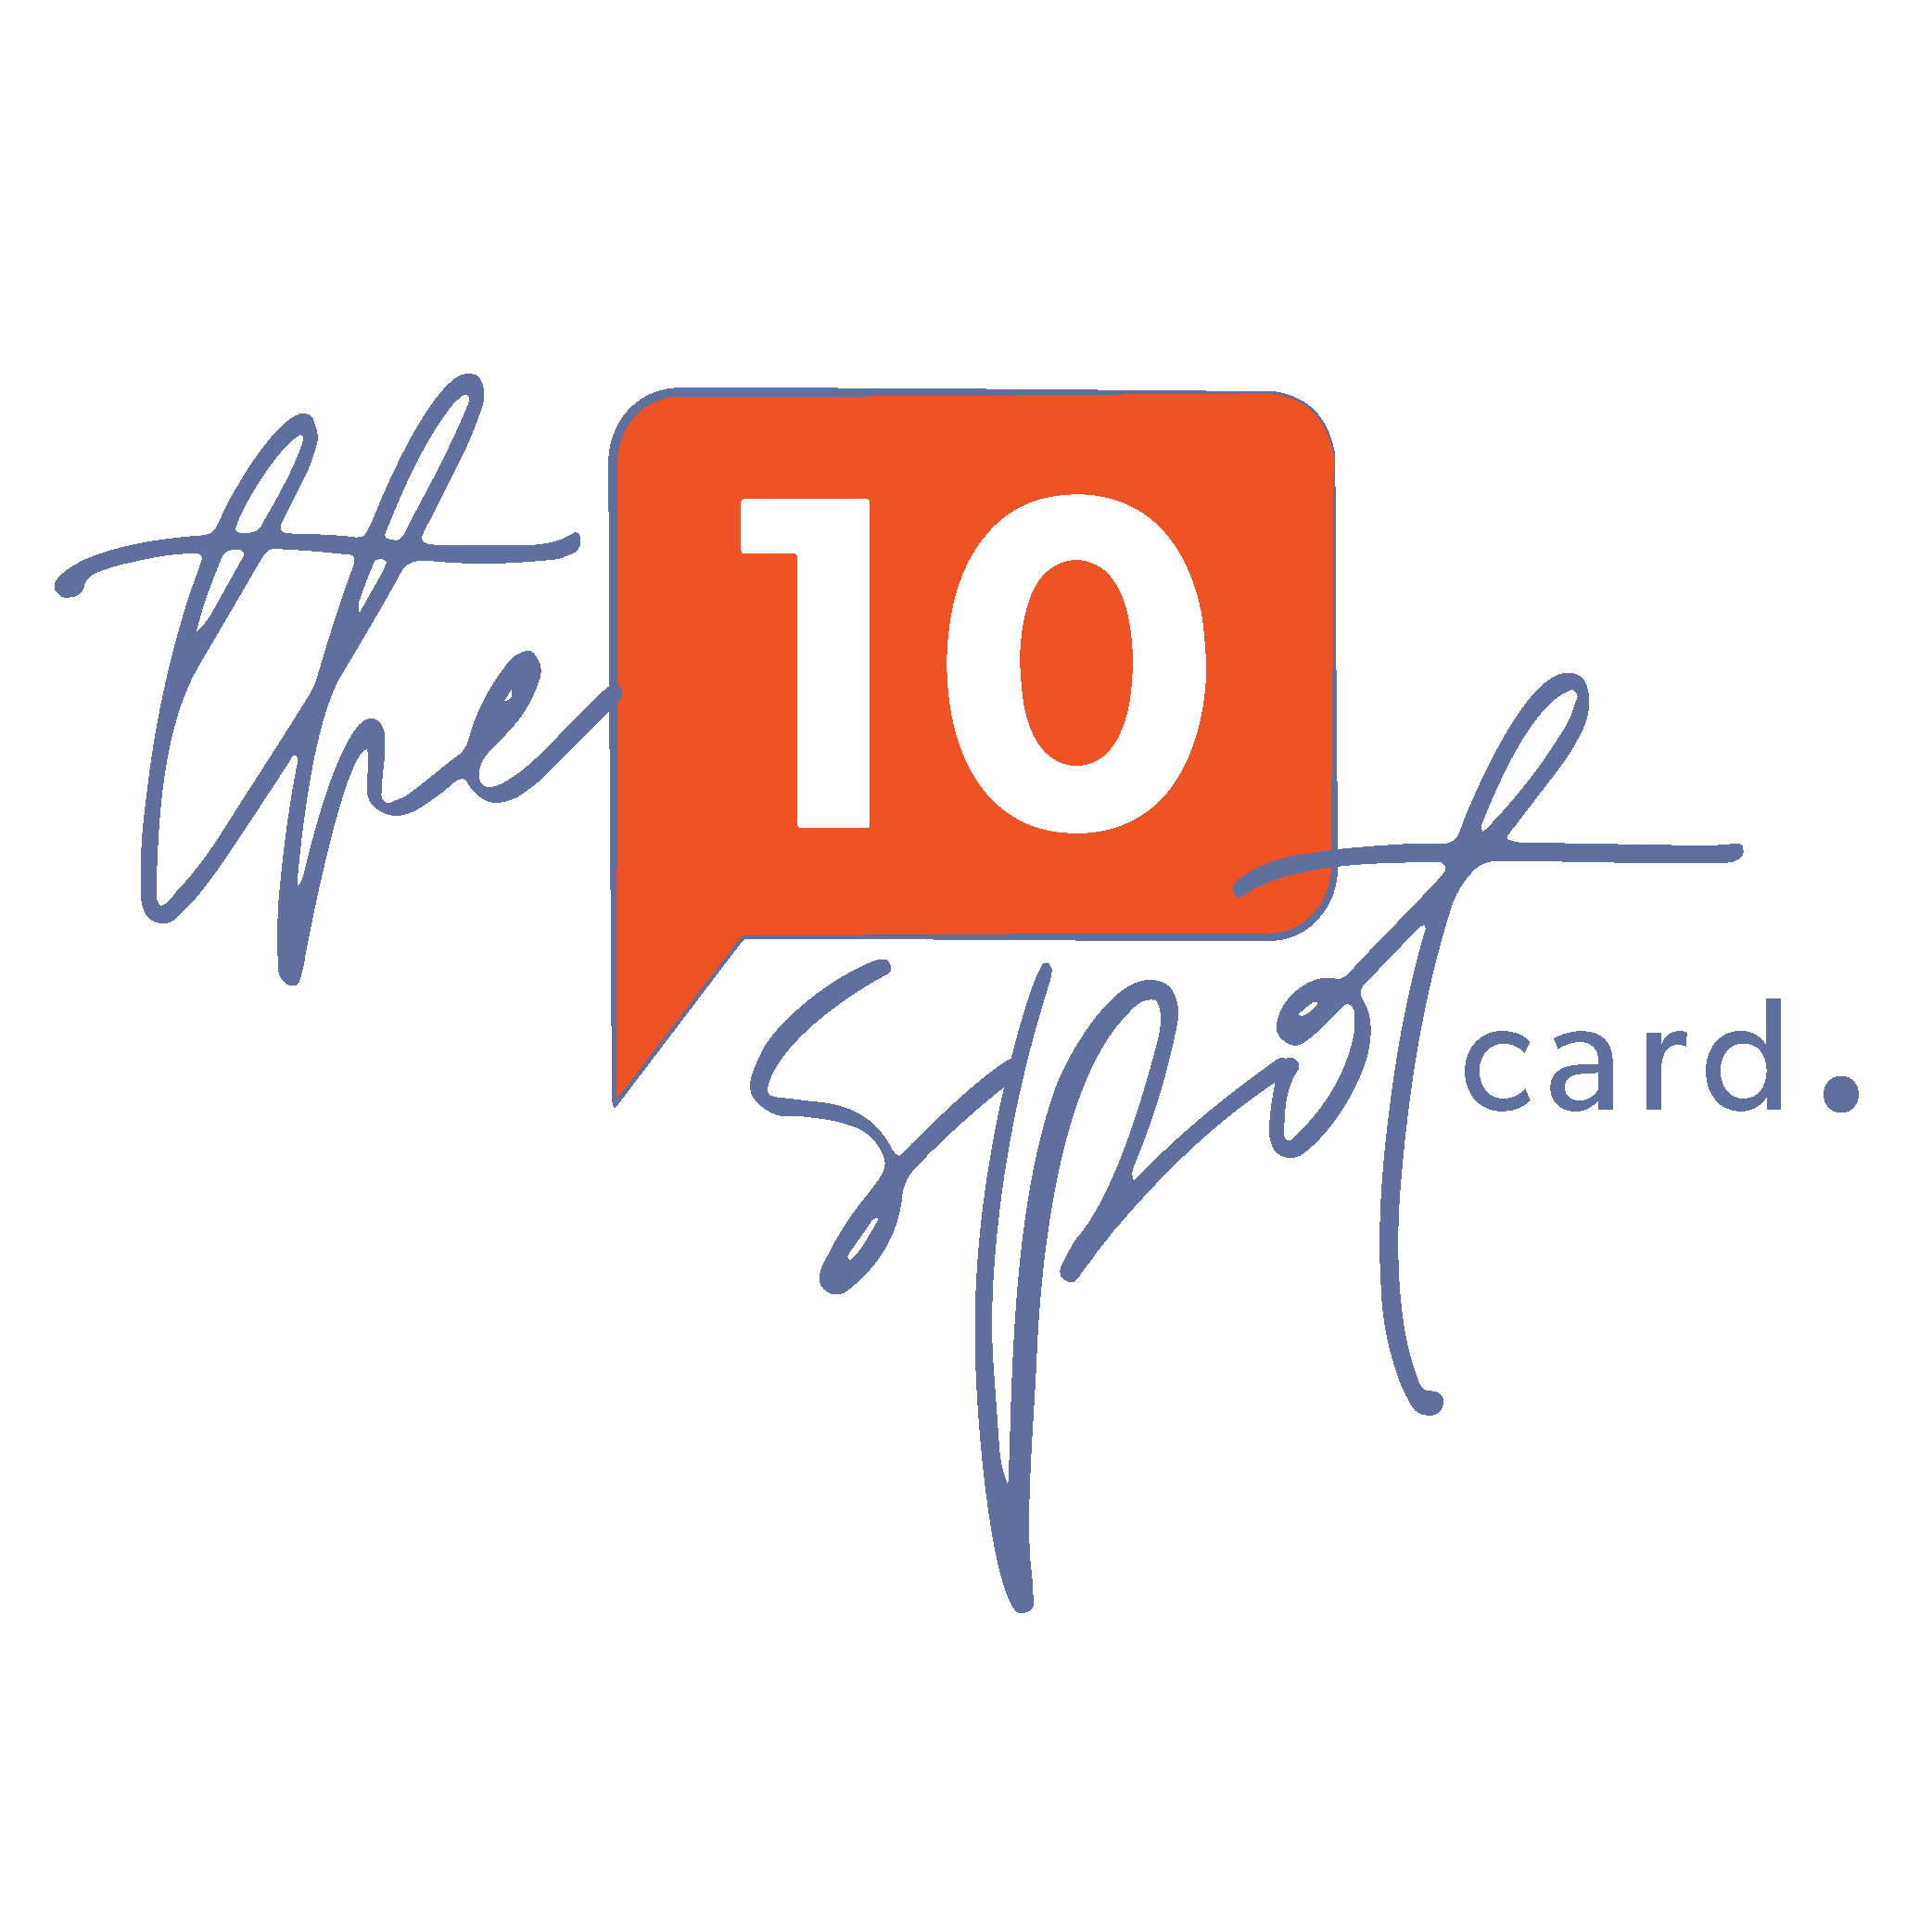 The 10 Spot Card logo